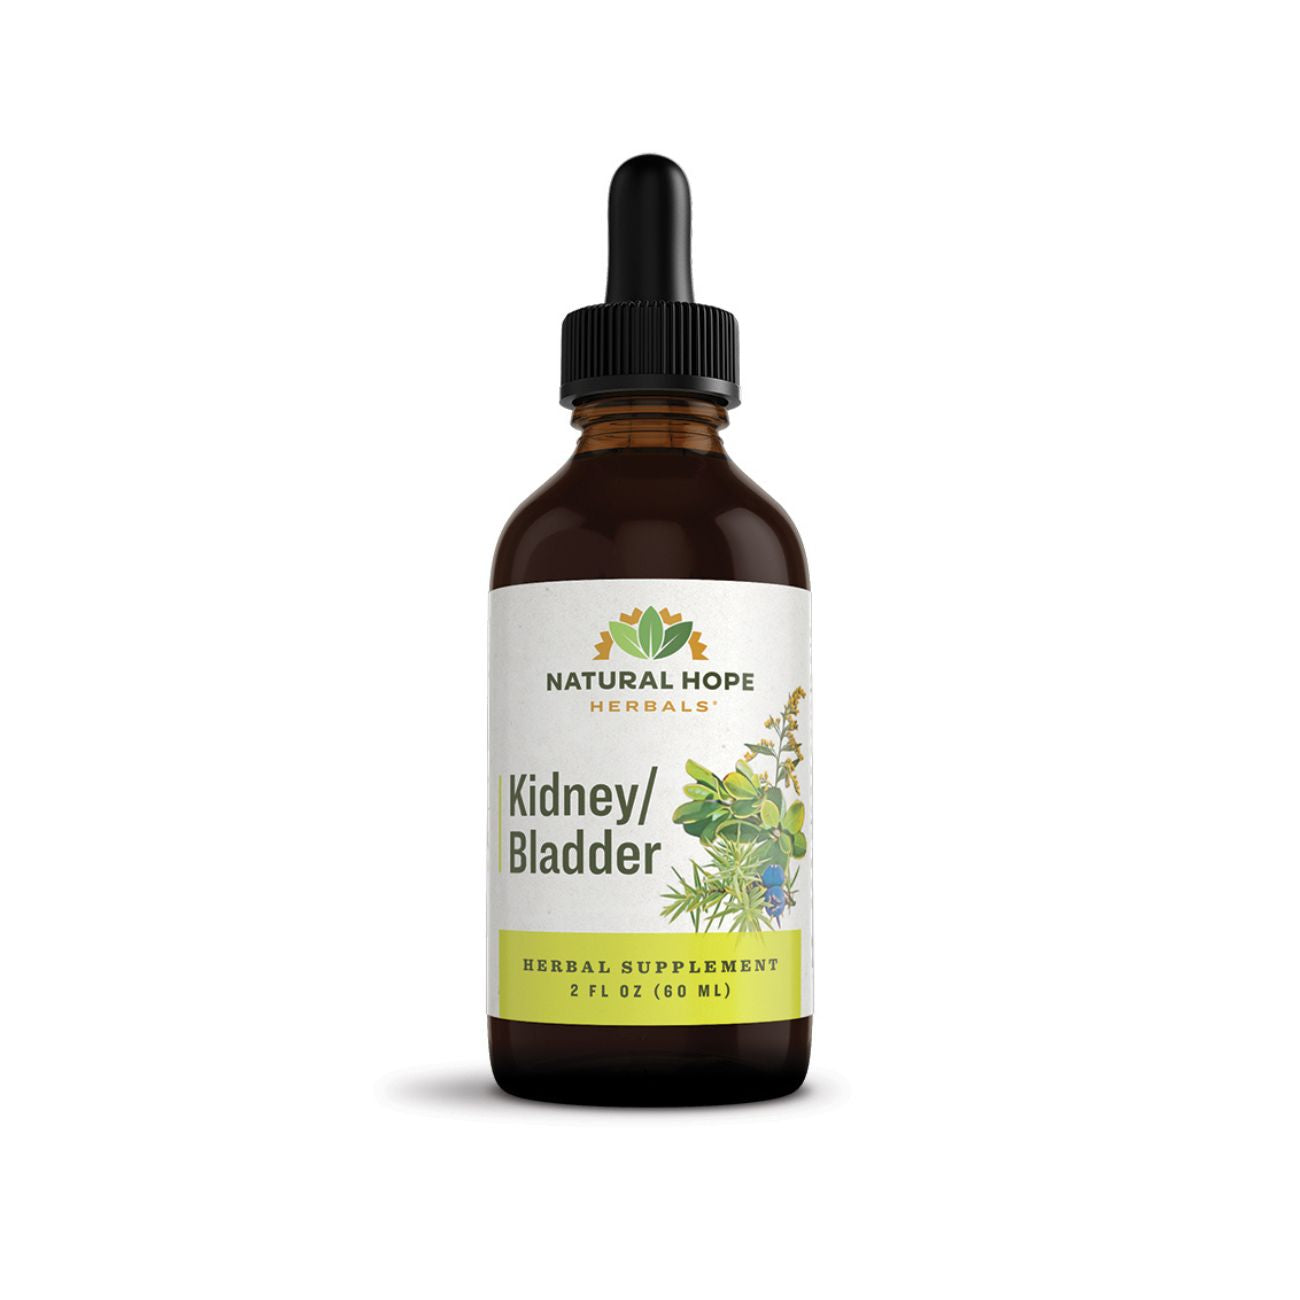 Kidney/Bladder - Natural Hope Herbals